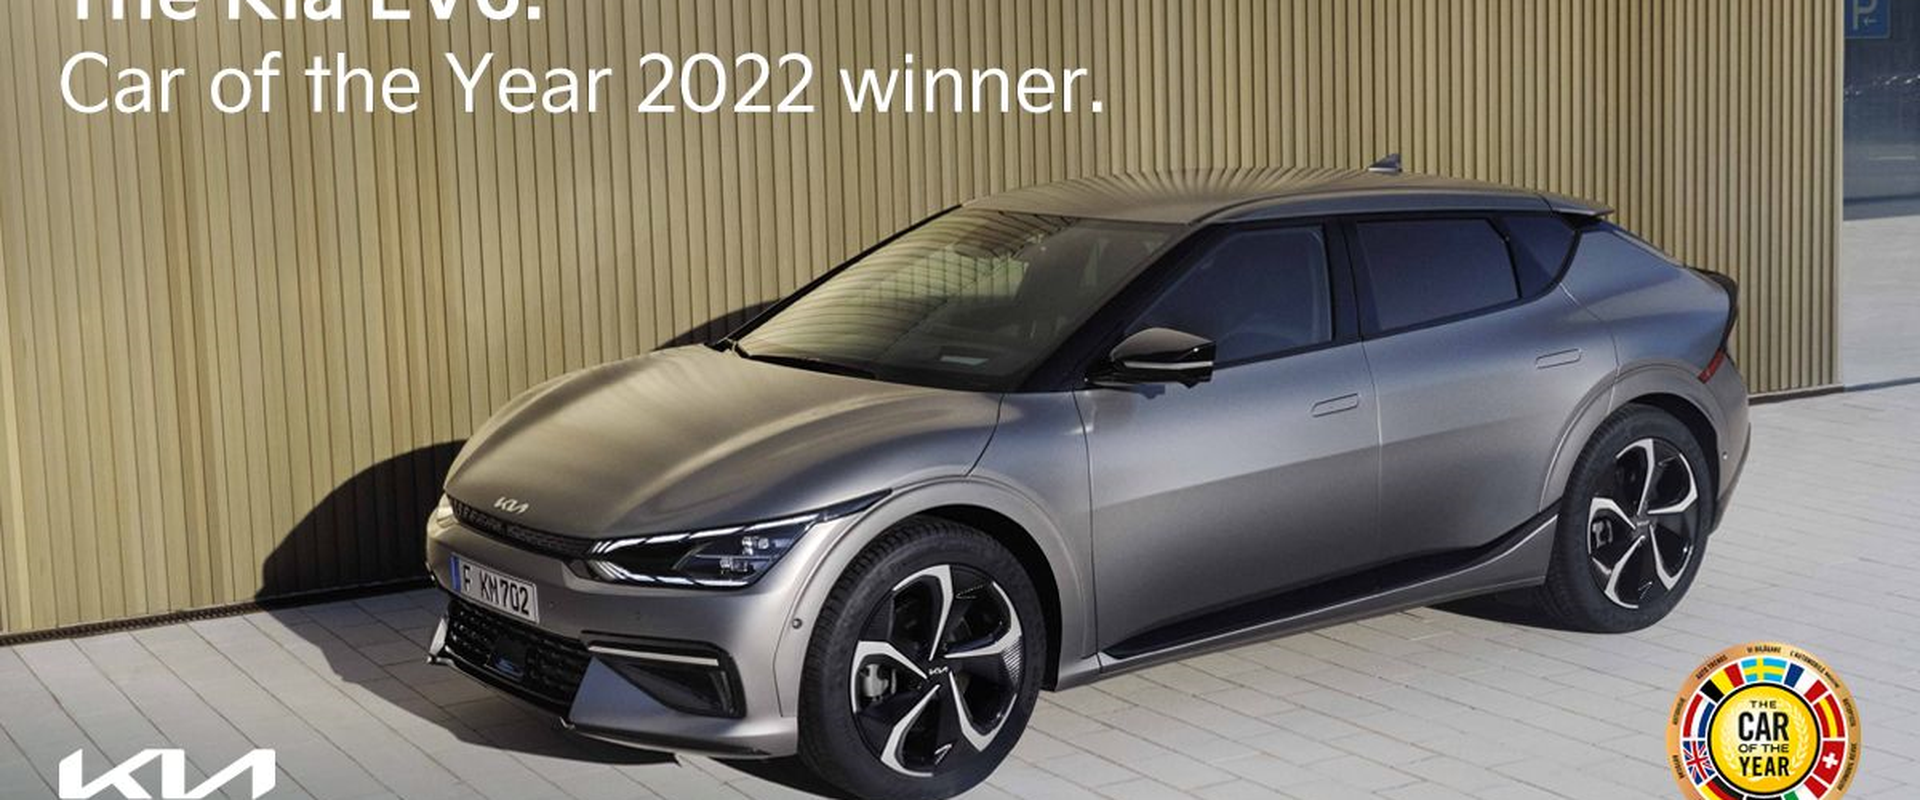 Car of the Year 2022 győztese: Kia EV6